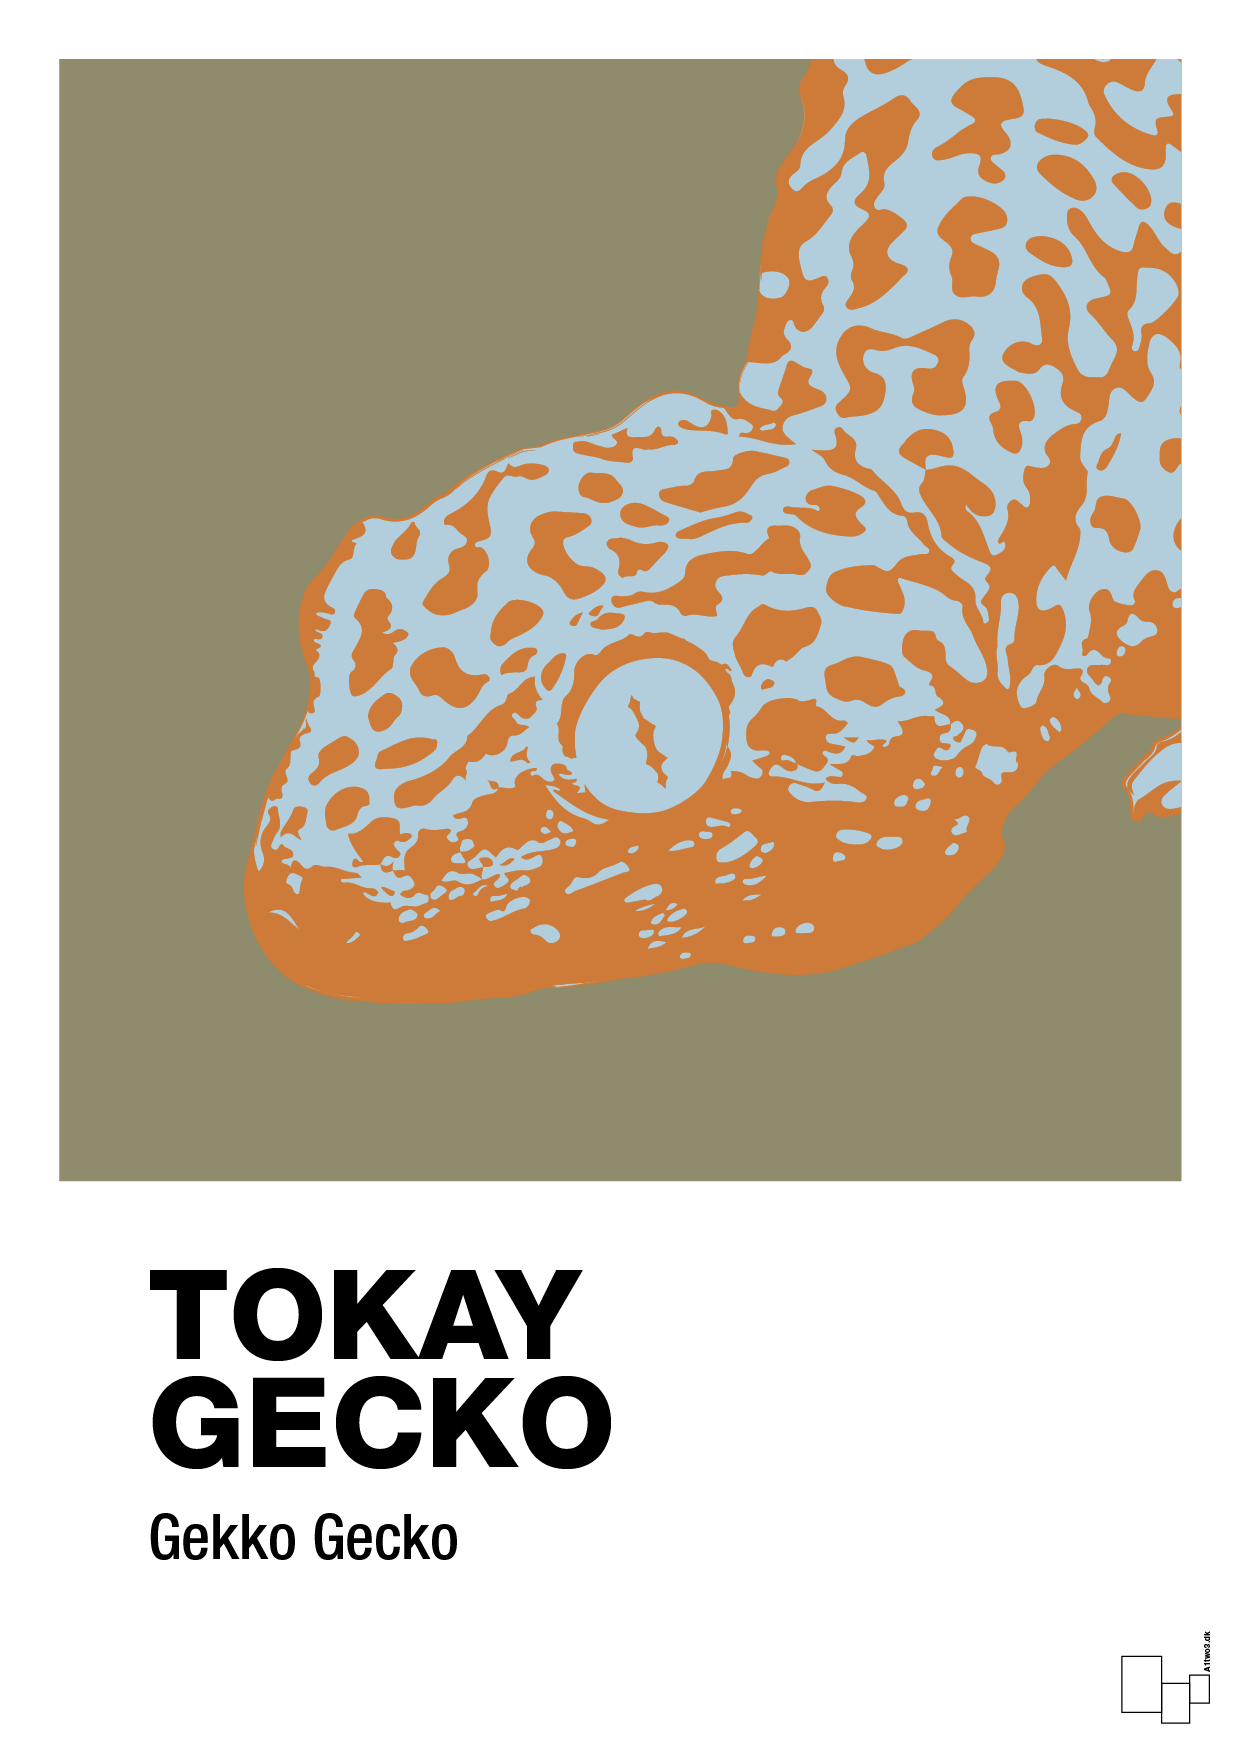 tokay gecko - Plakat med Videnskab i Misty Forrest